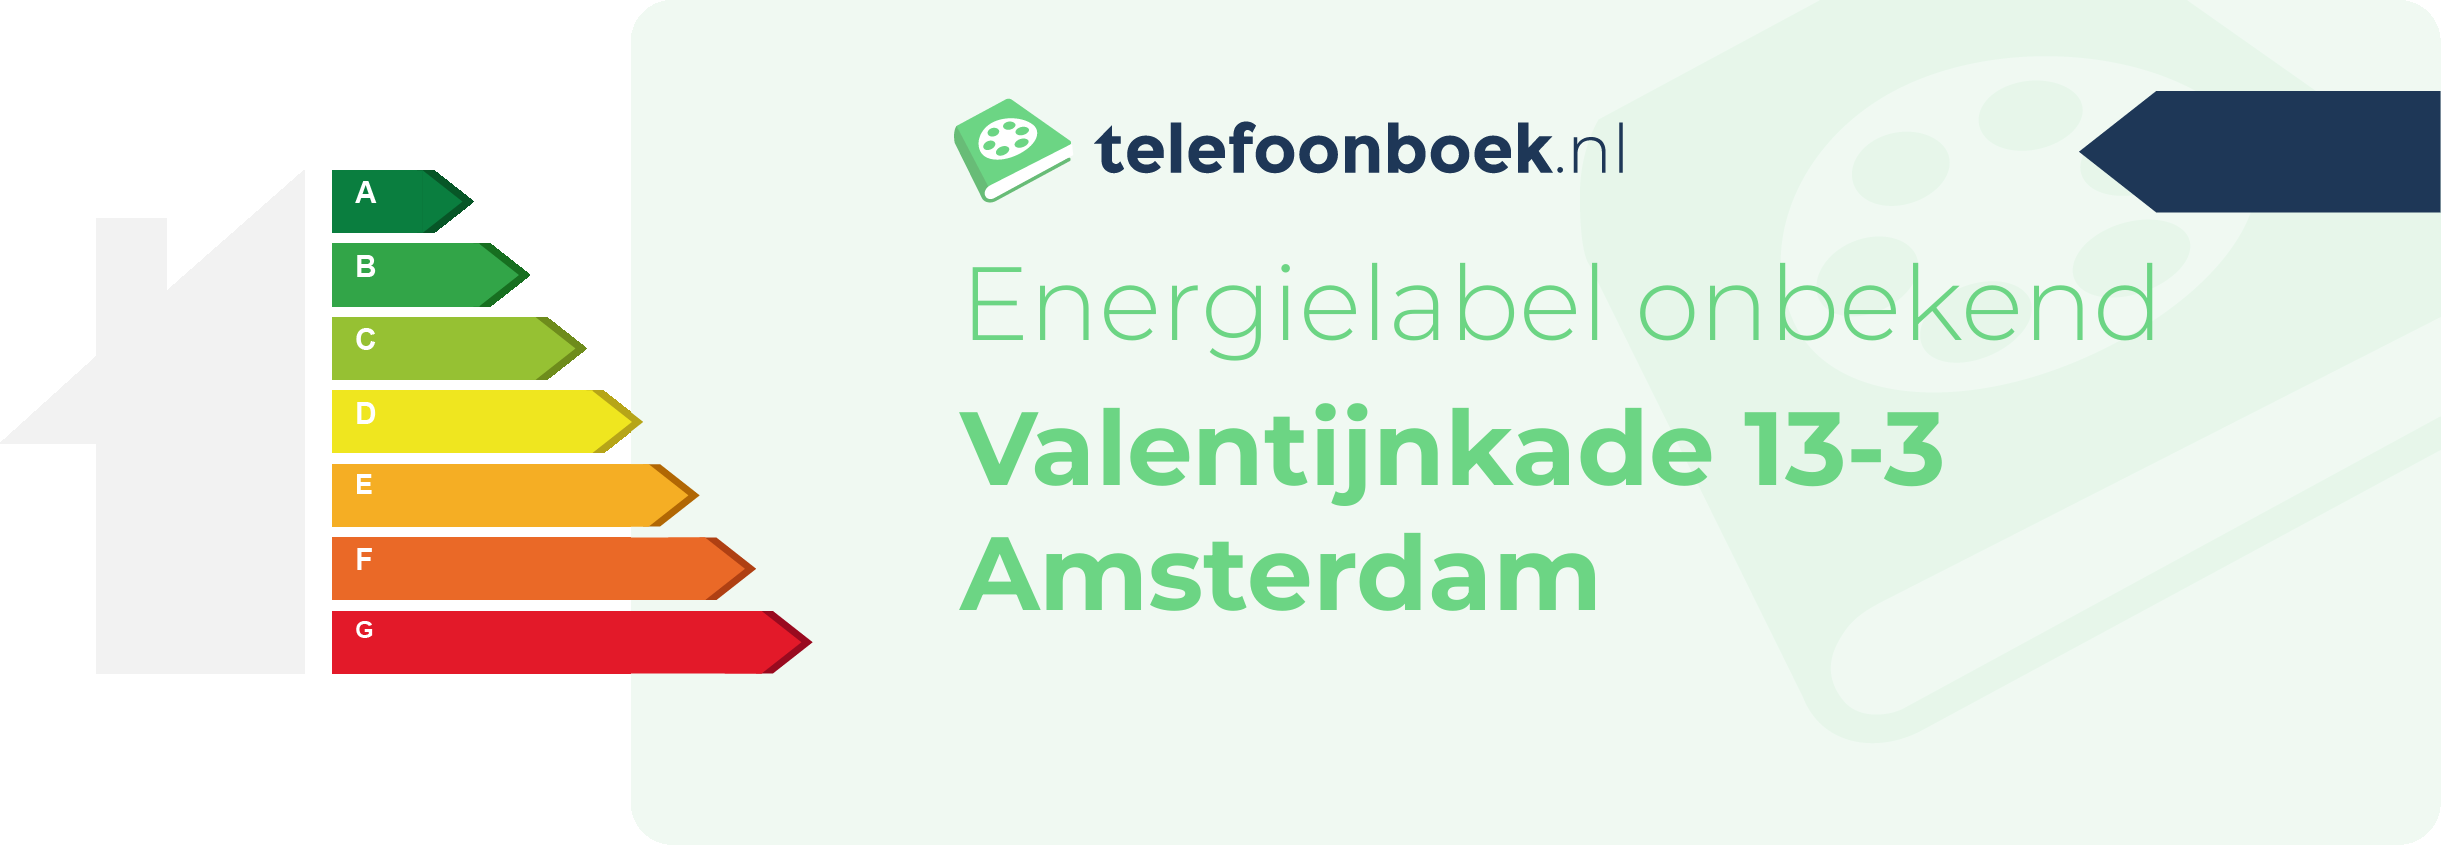 Energielabel Valentijnkade 13-3 Amsterdam